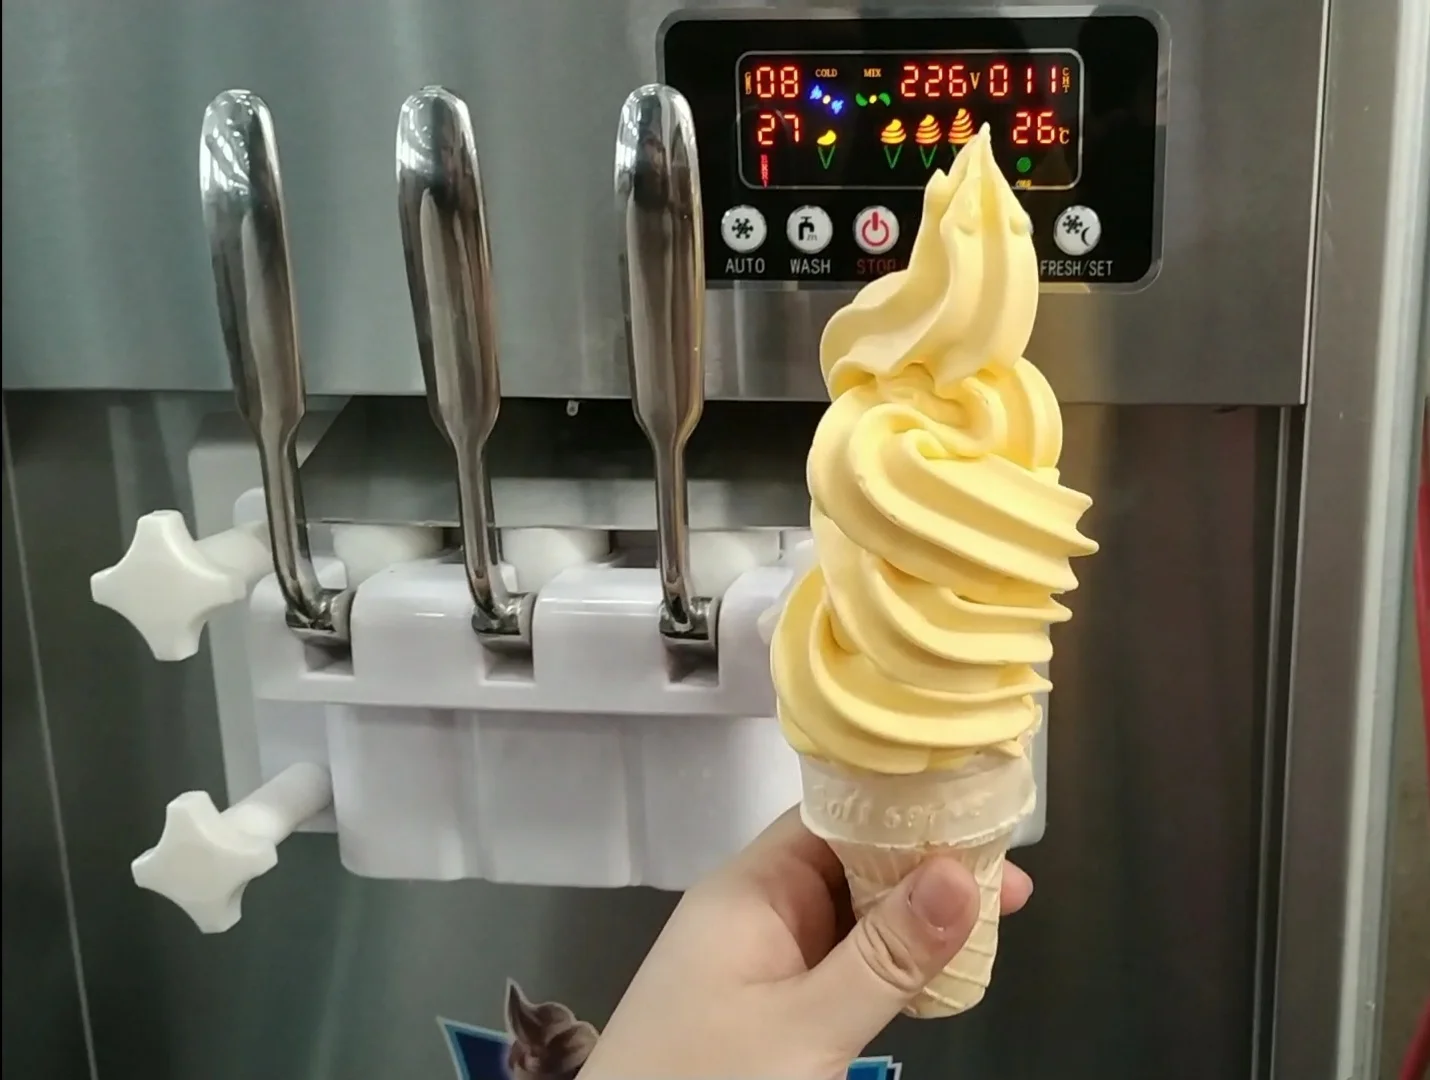 
BQL-S22-2 коммерческая машина для мягкого мороженого, Производитель йогурта 